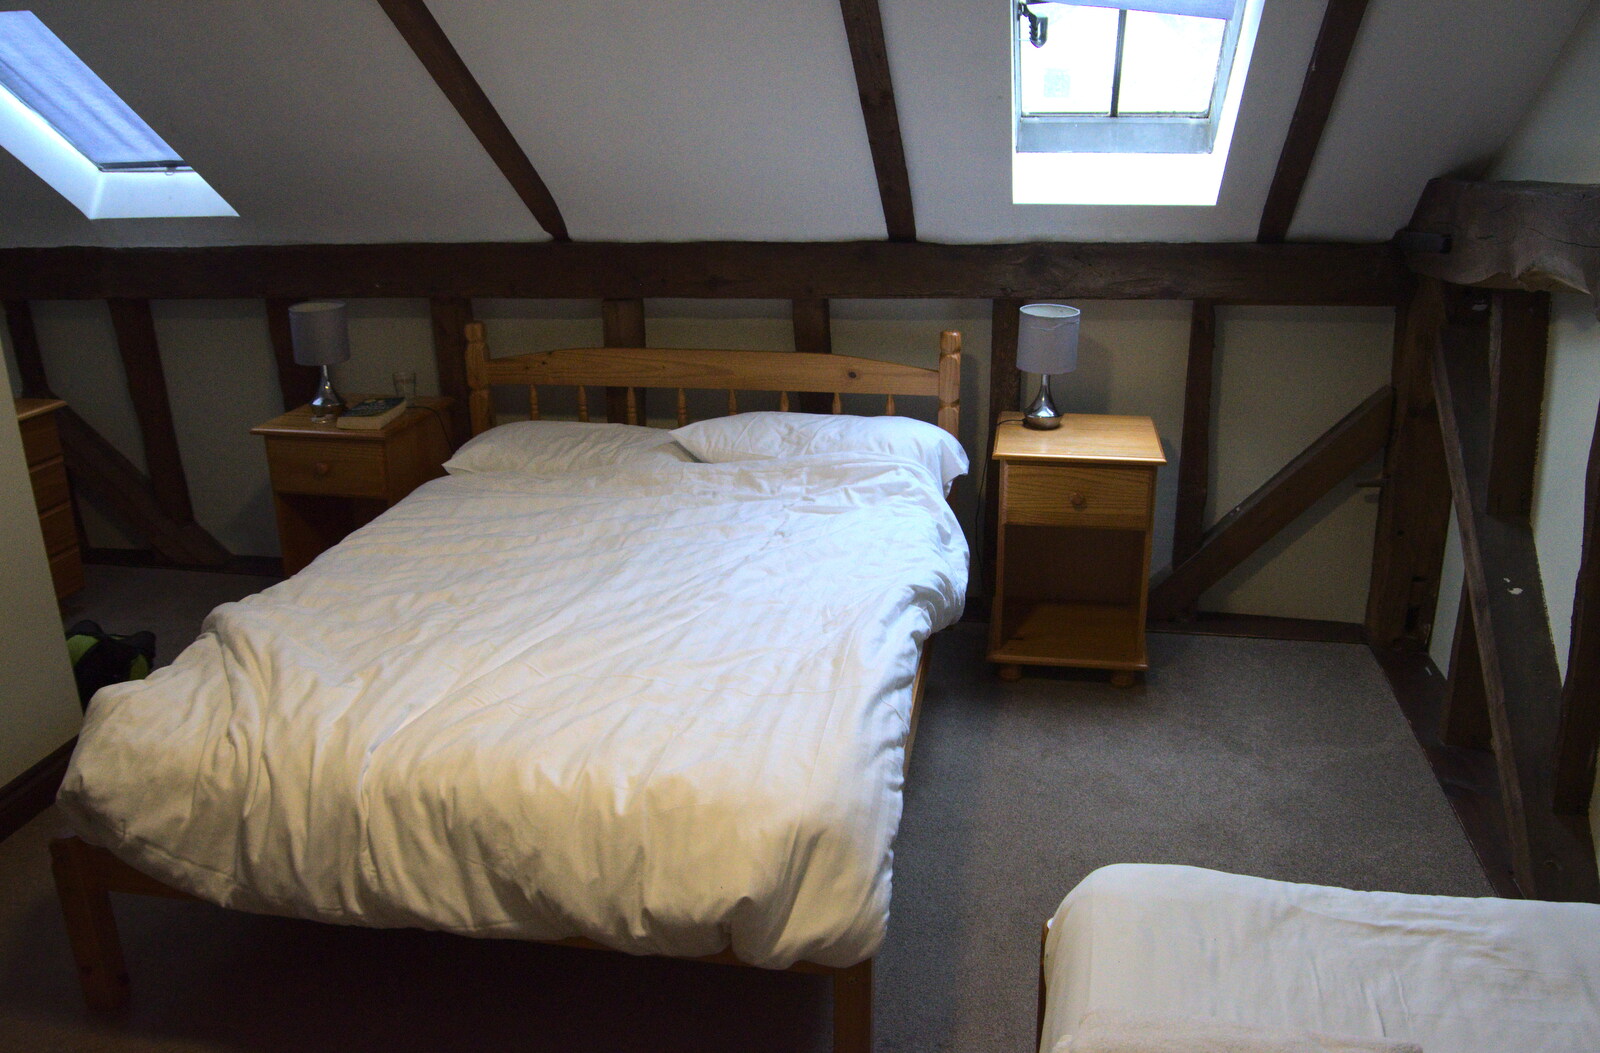 The boys' bedroom from A Trip to Sandringham Estate, Norfolk - 31st October 2020